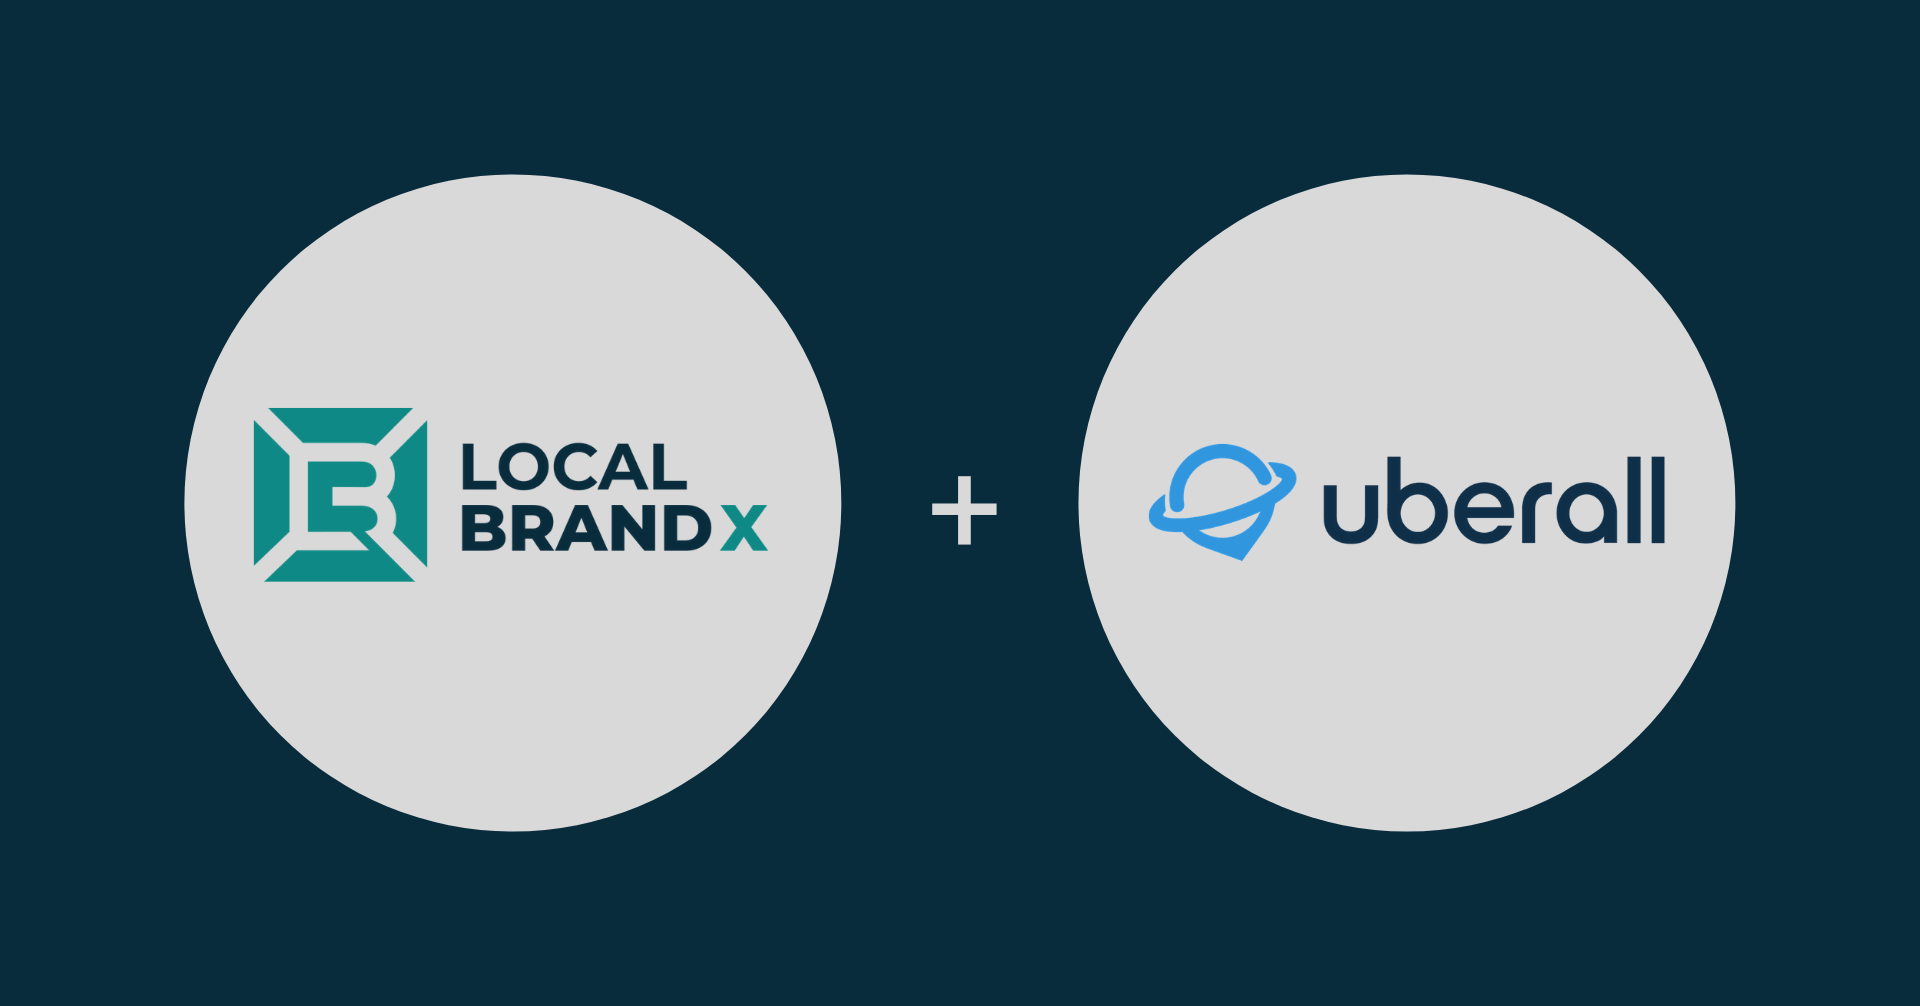 Local Brand X + Uberall = Local & Location Marketing